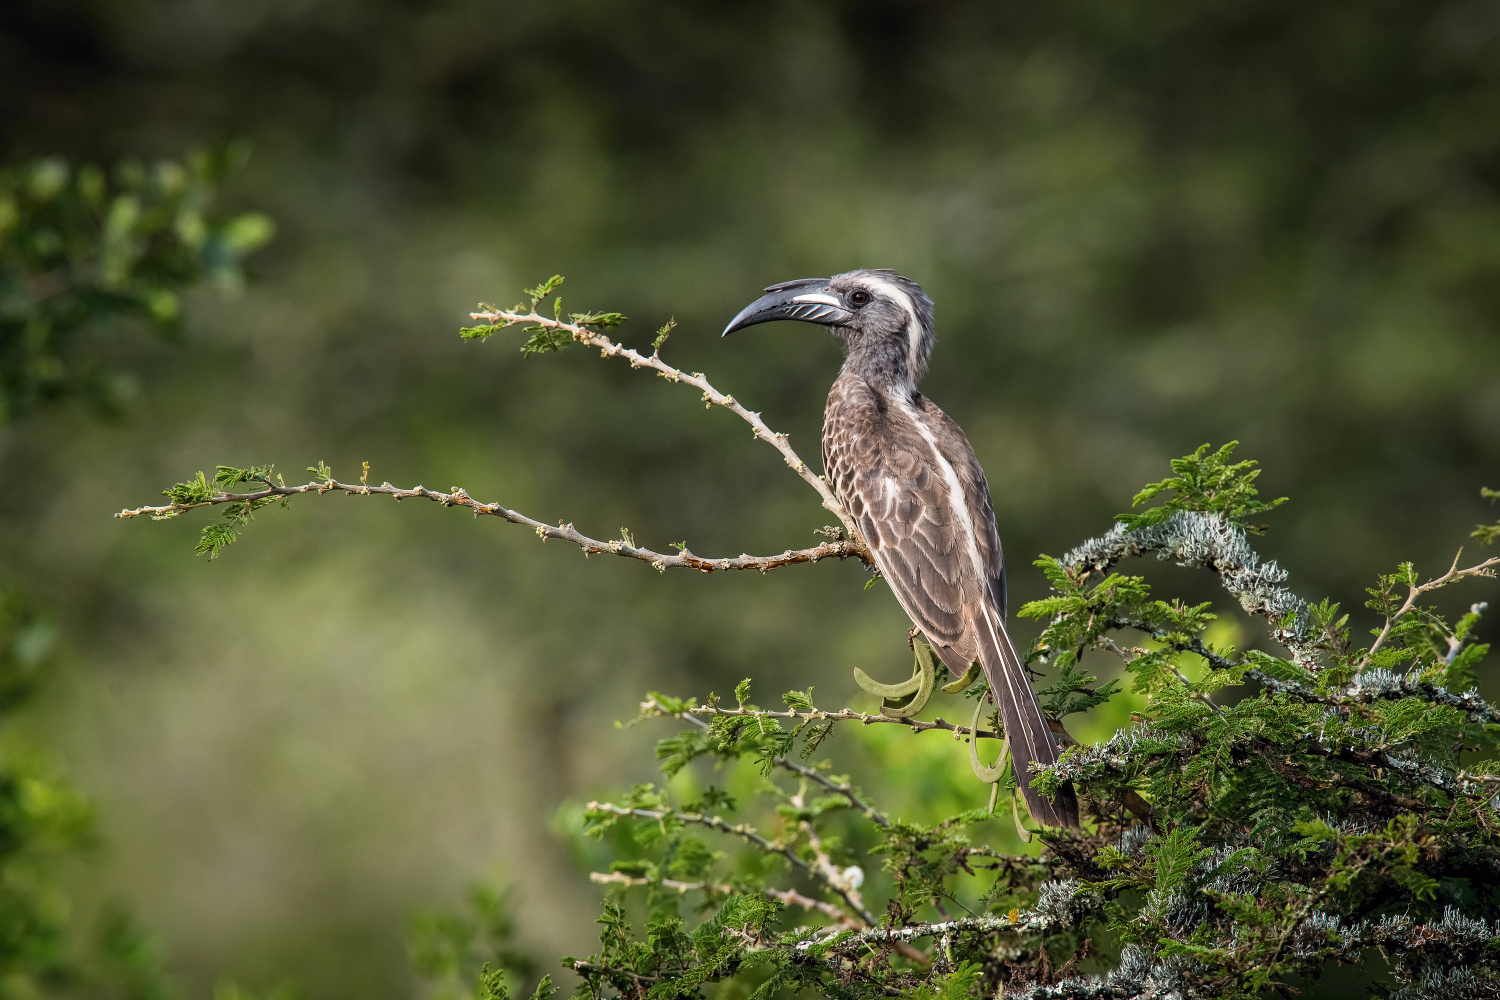 zoborožec šedý (tockus nasutus) African grey hornbill